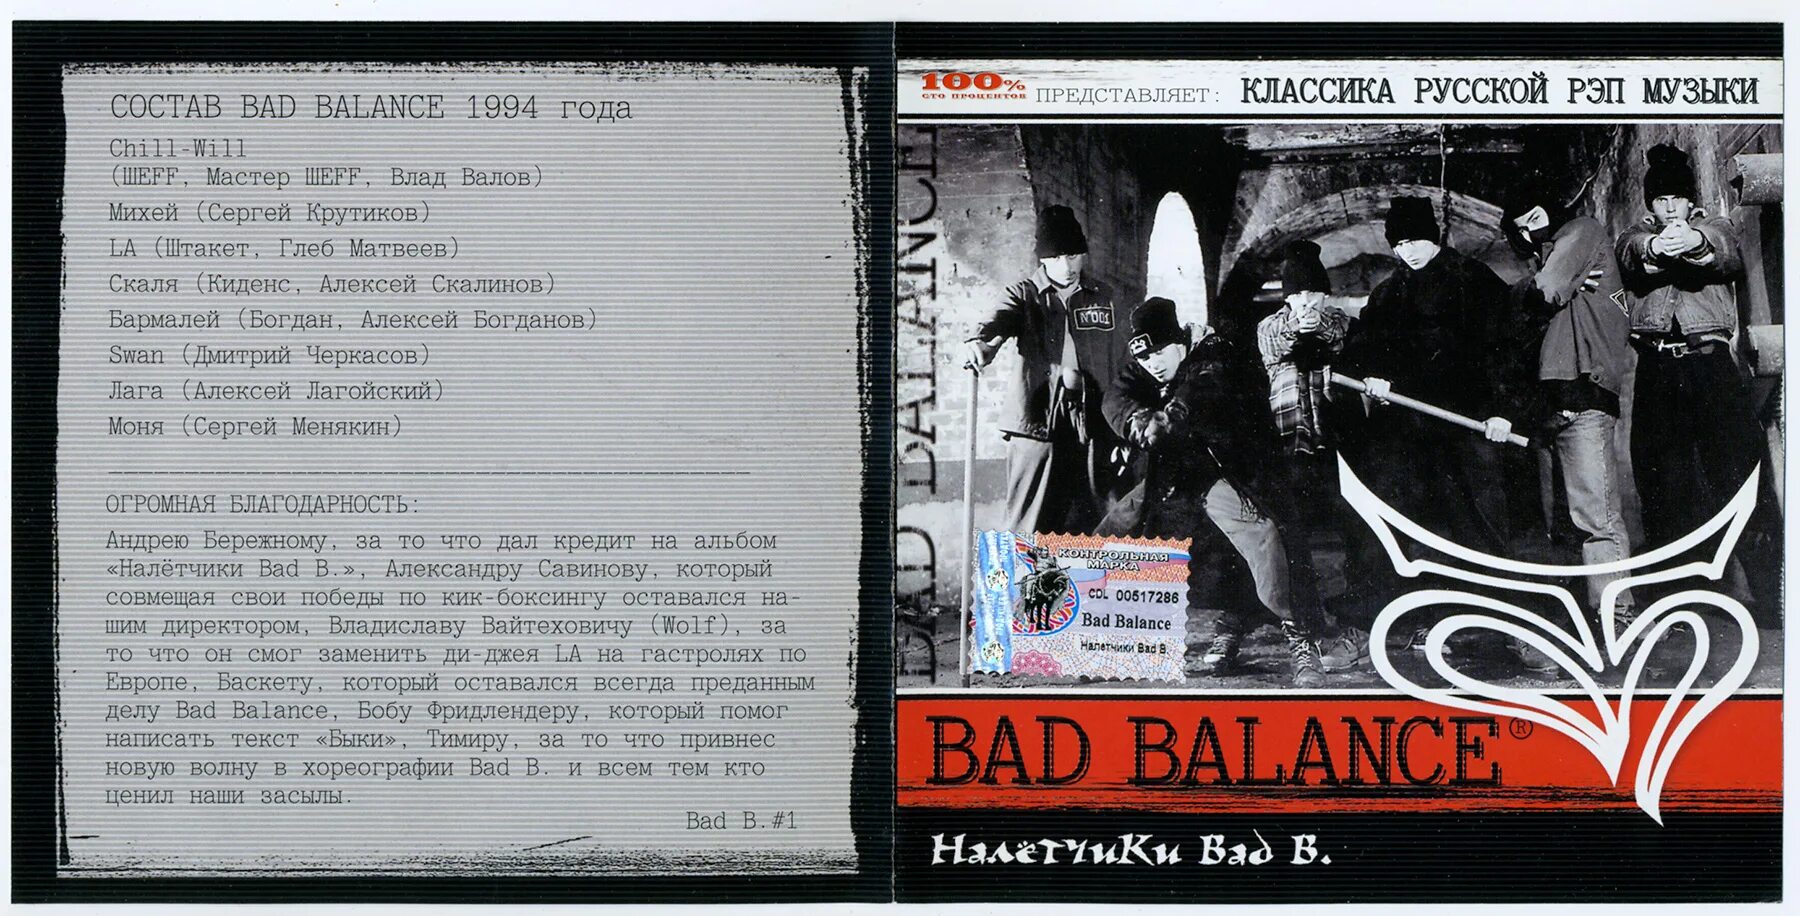 Рэп без мелодии. Bad Balance 1994 налётчики Bad b.. Bad Balance состав. Бэд бэланс альбомы.